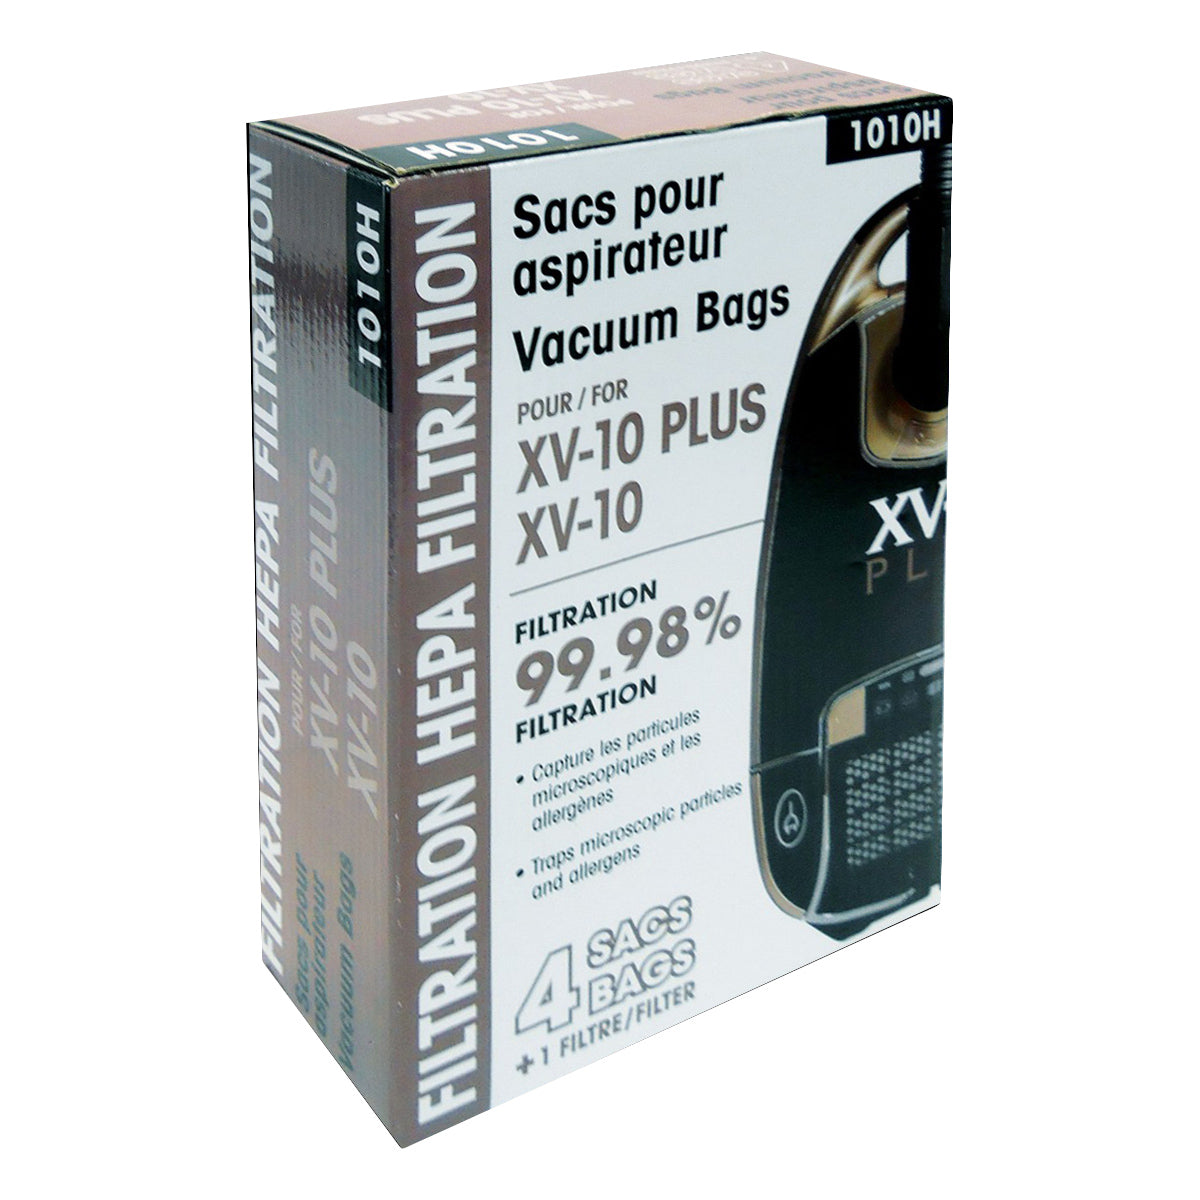 Johnny Vac XV10 HEPA Vacuum Bags (4 pack + 1 Filter) - Super Vacs